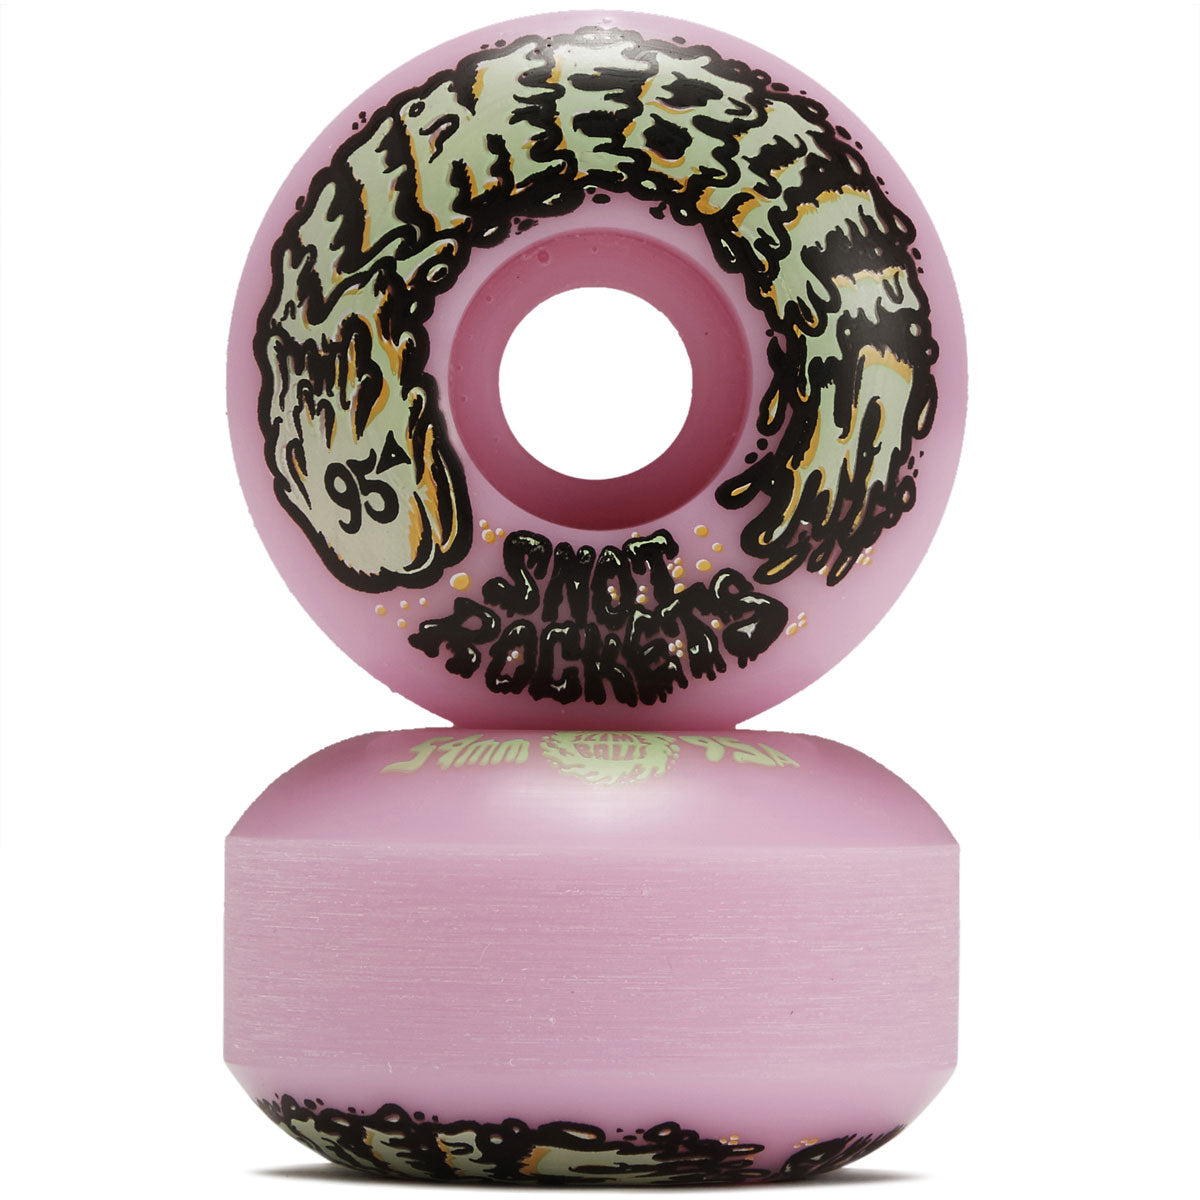 Slime Balls Snot Rockets 95a Skateboard Wheels - Pastel Pink - 54mm image 2